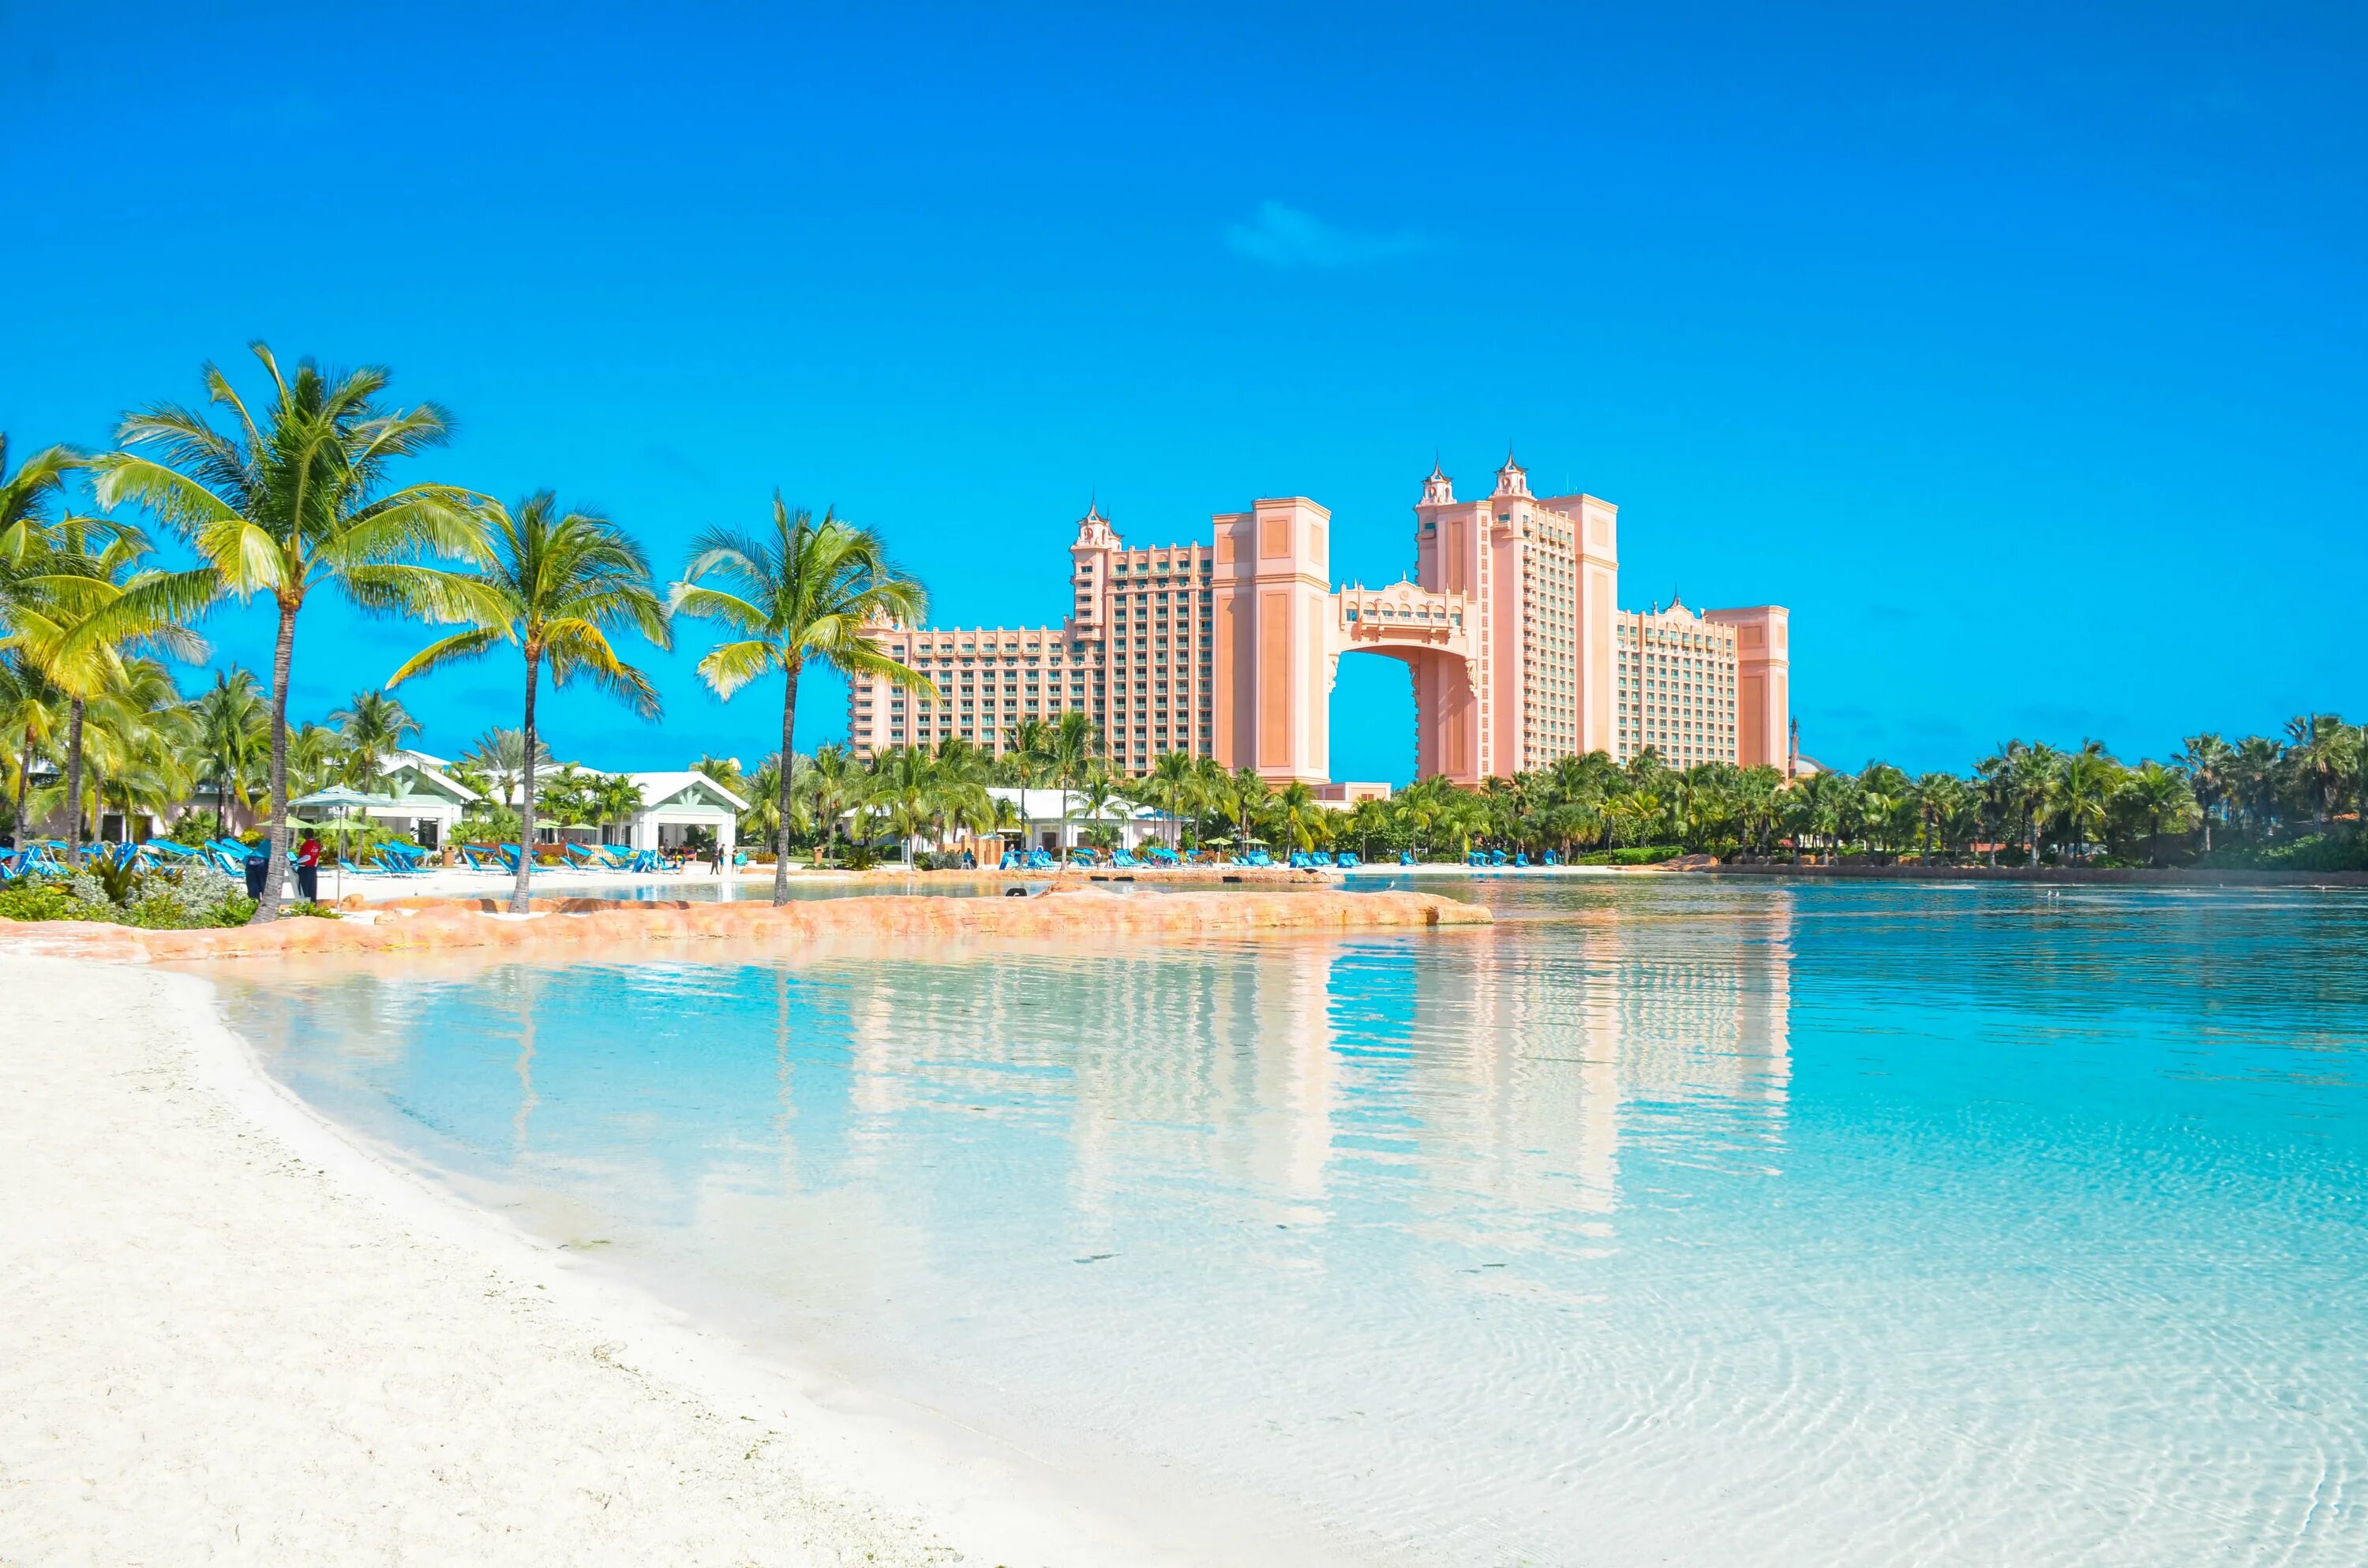 Bahamas islands. Атлантис Нассау Багамские острова. Багамы отель Атлантис Нассау. Остров Парадайз Багамские острова. Atlantis Paradise Island Багамские острова.